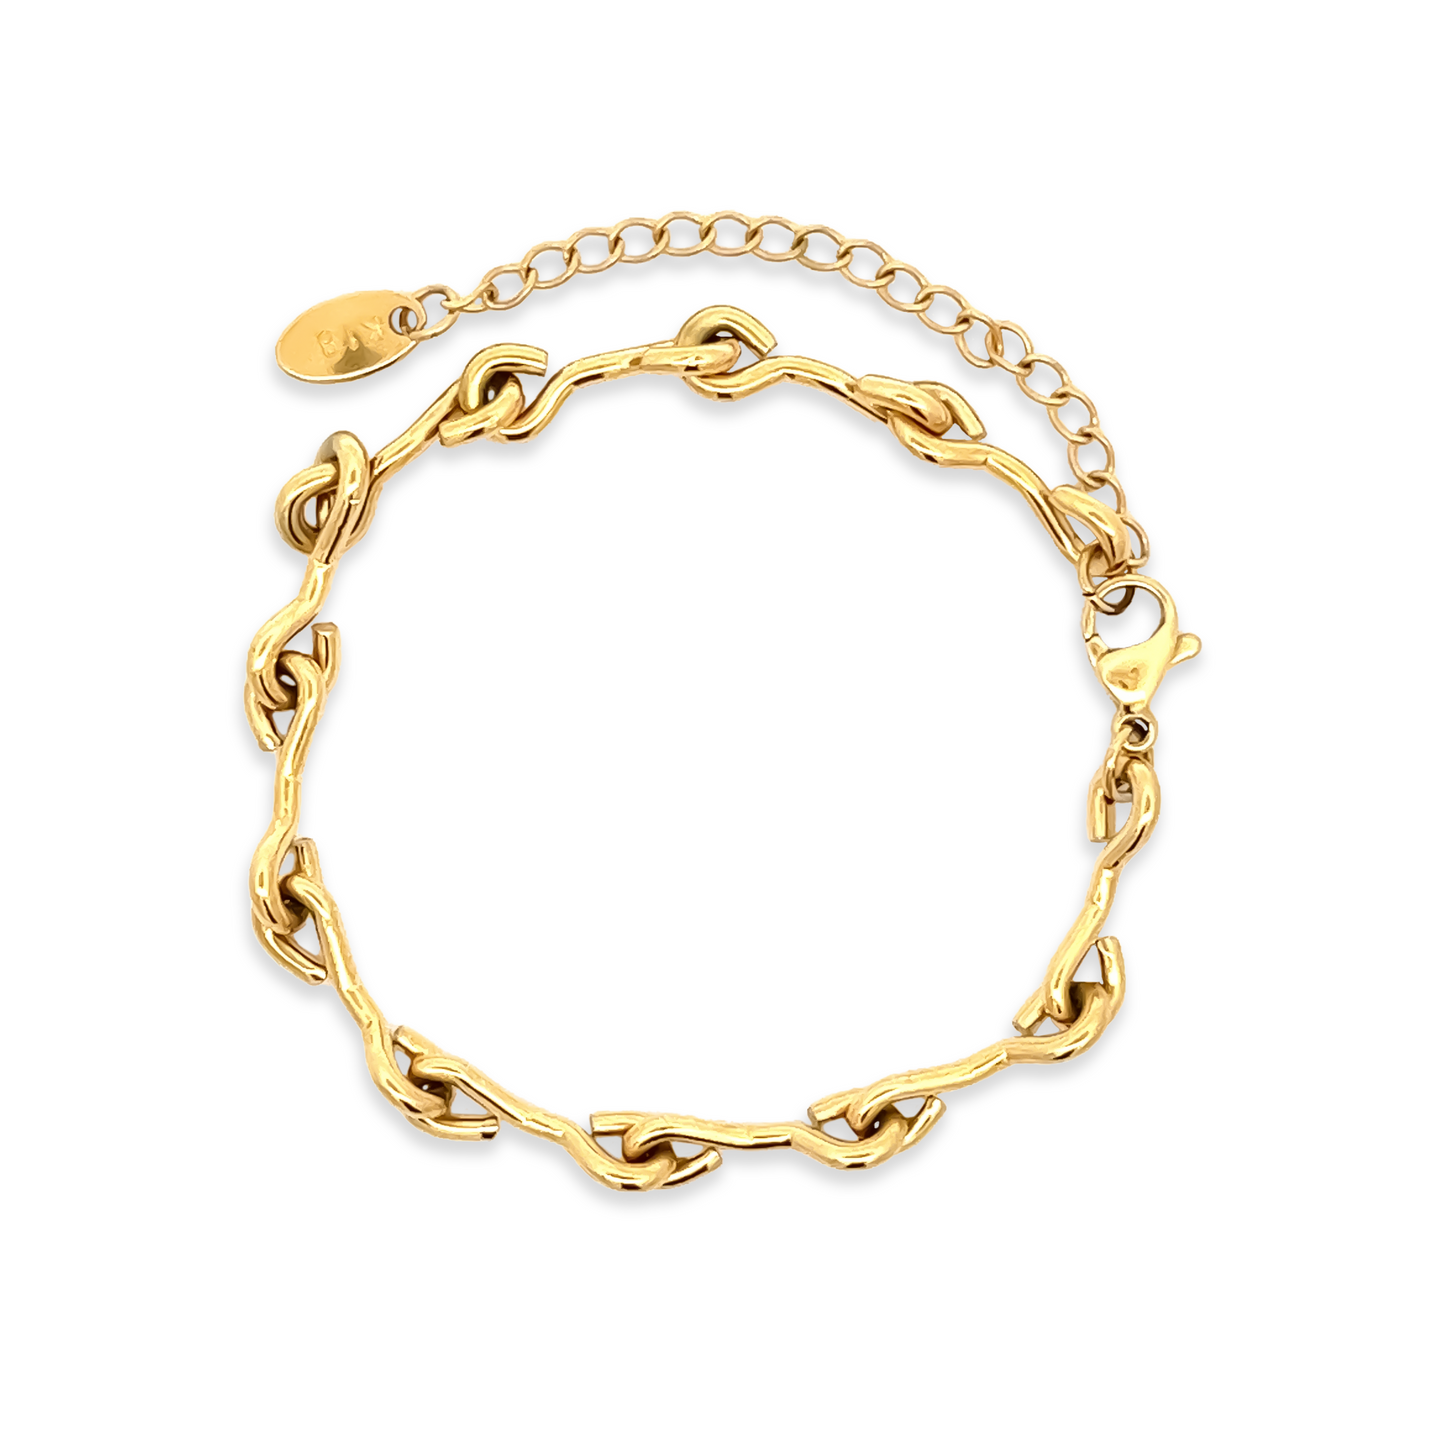 Tess Bracelet in Gold